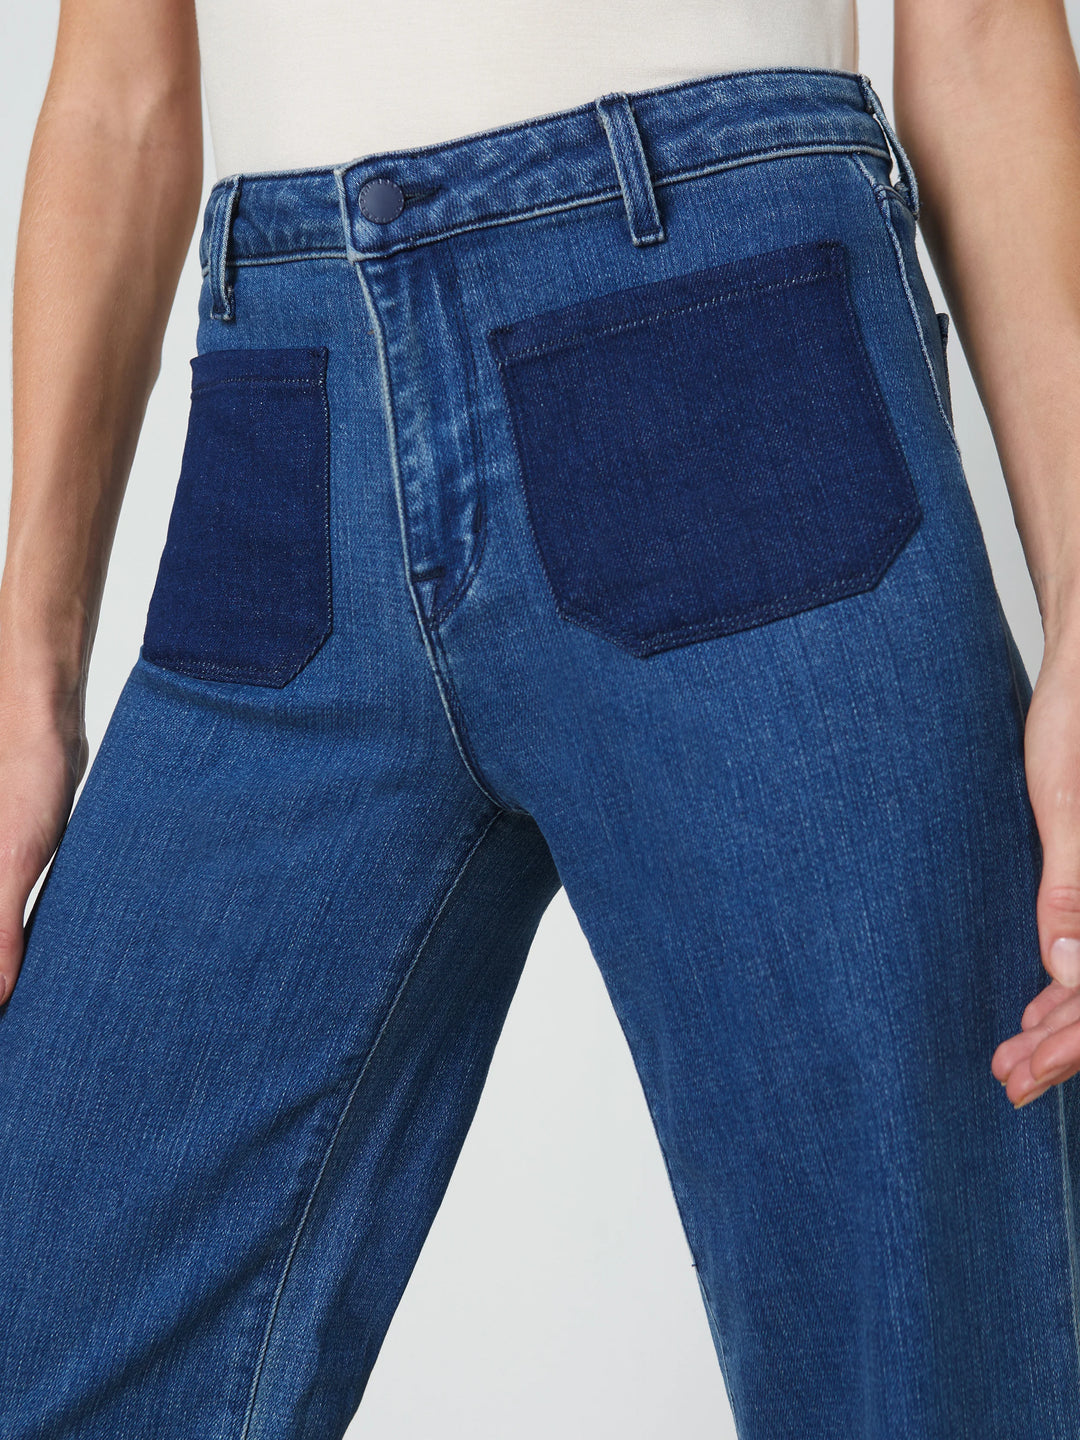 Nolan Patch Pocket Jean in Dorsey